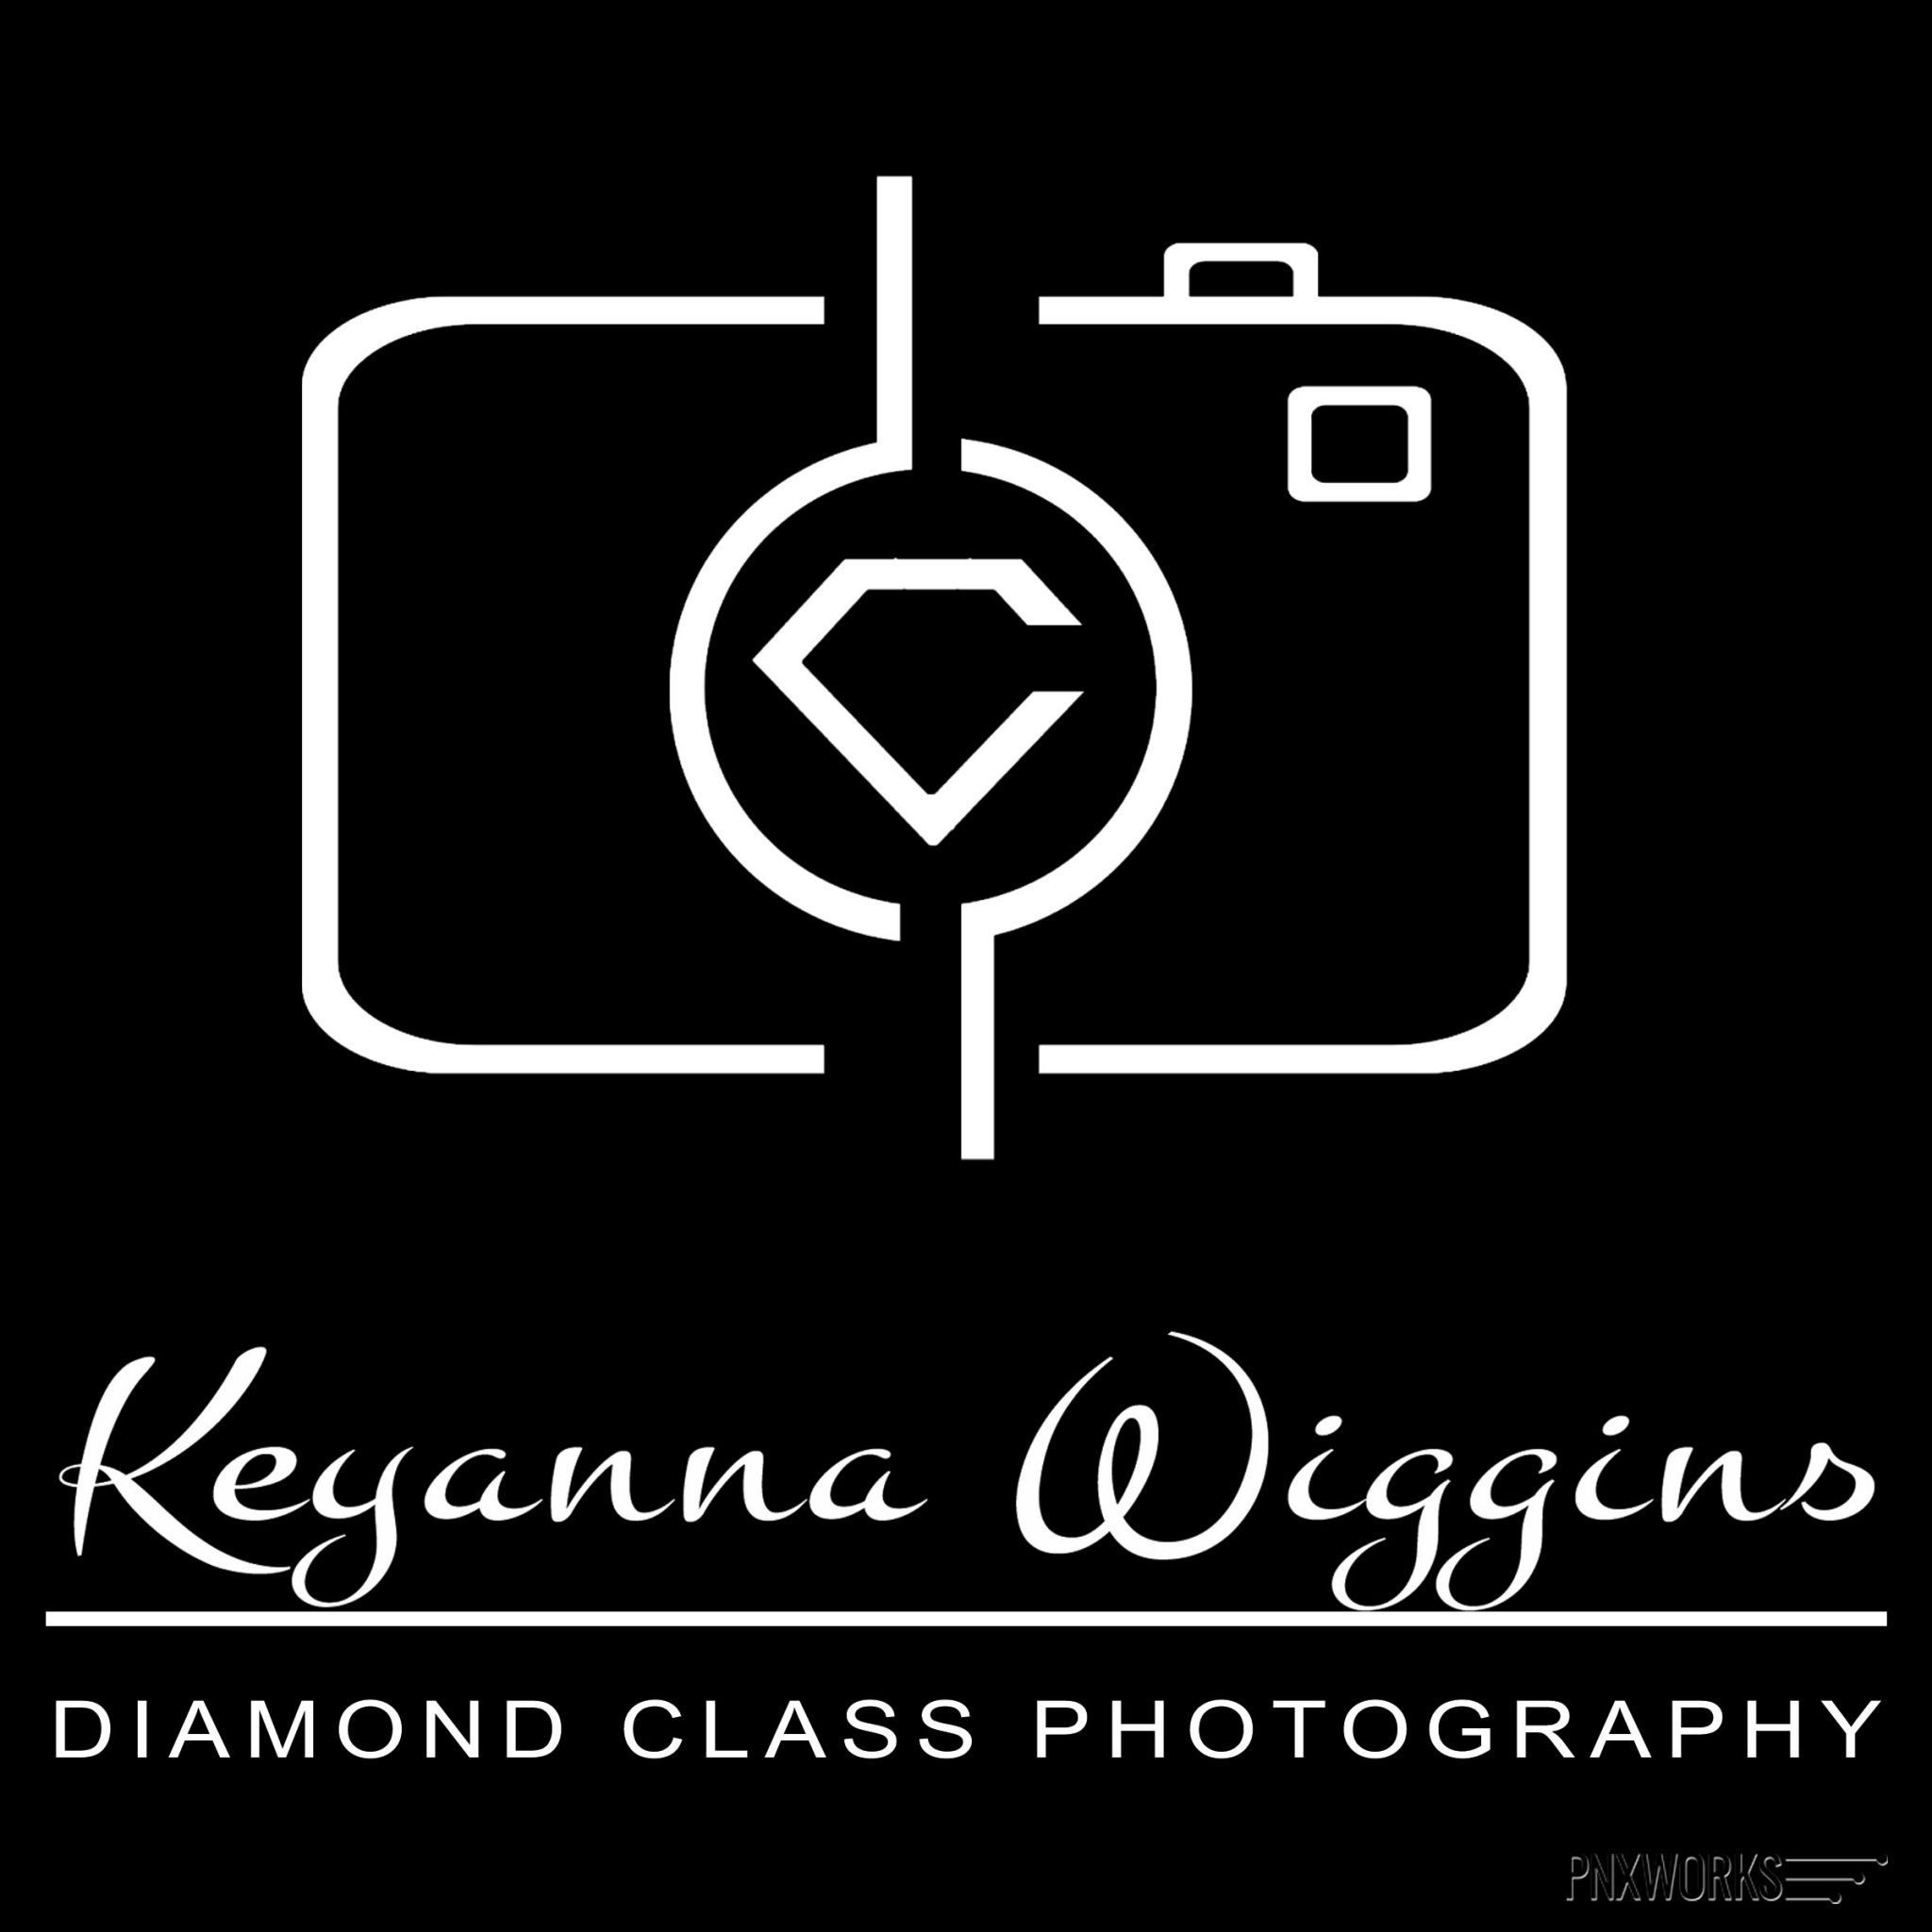 Watermark Logo Diamond Class Photography Pnx Works